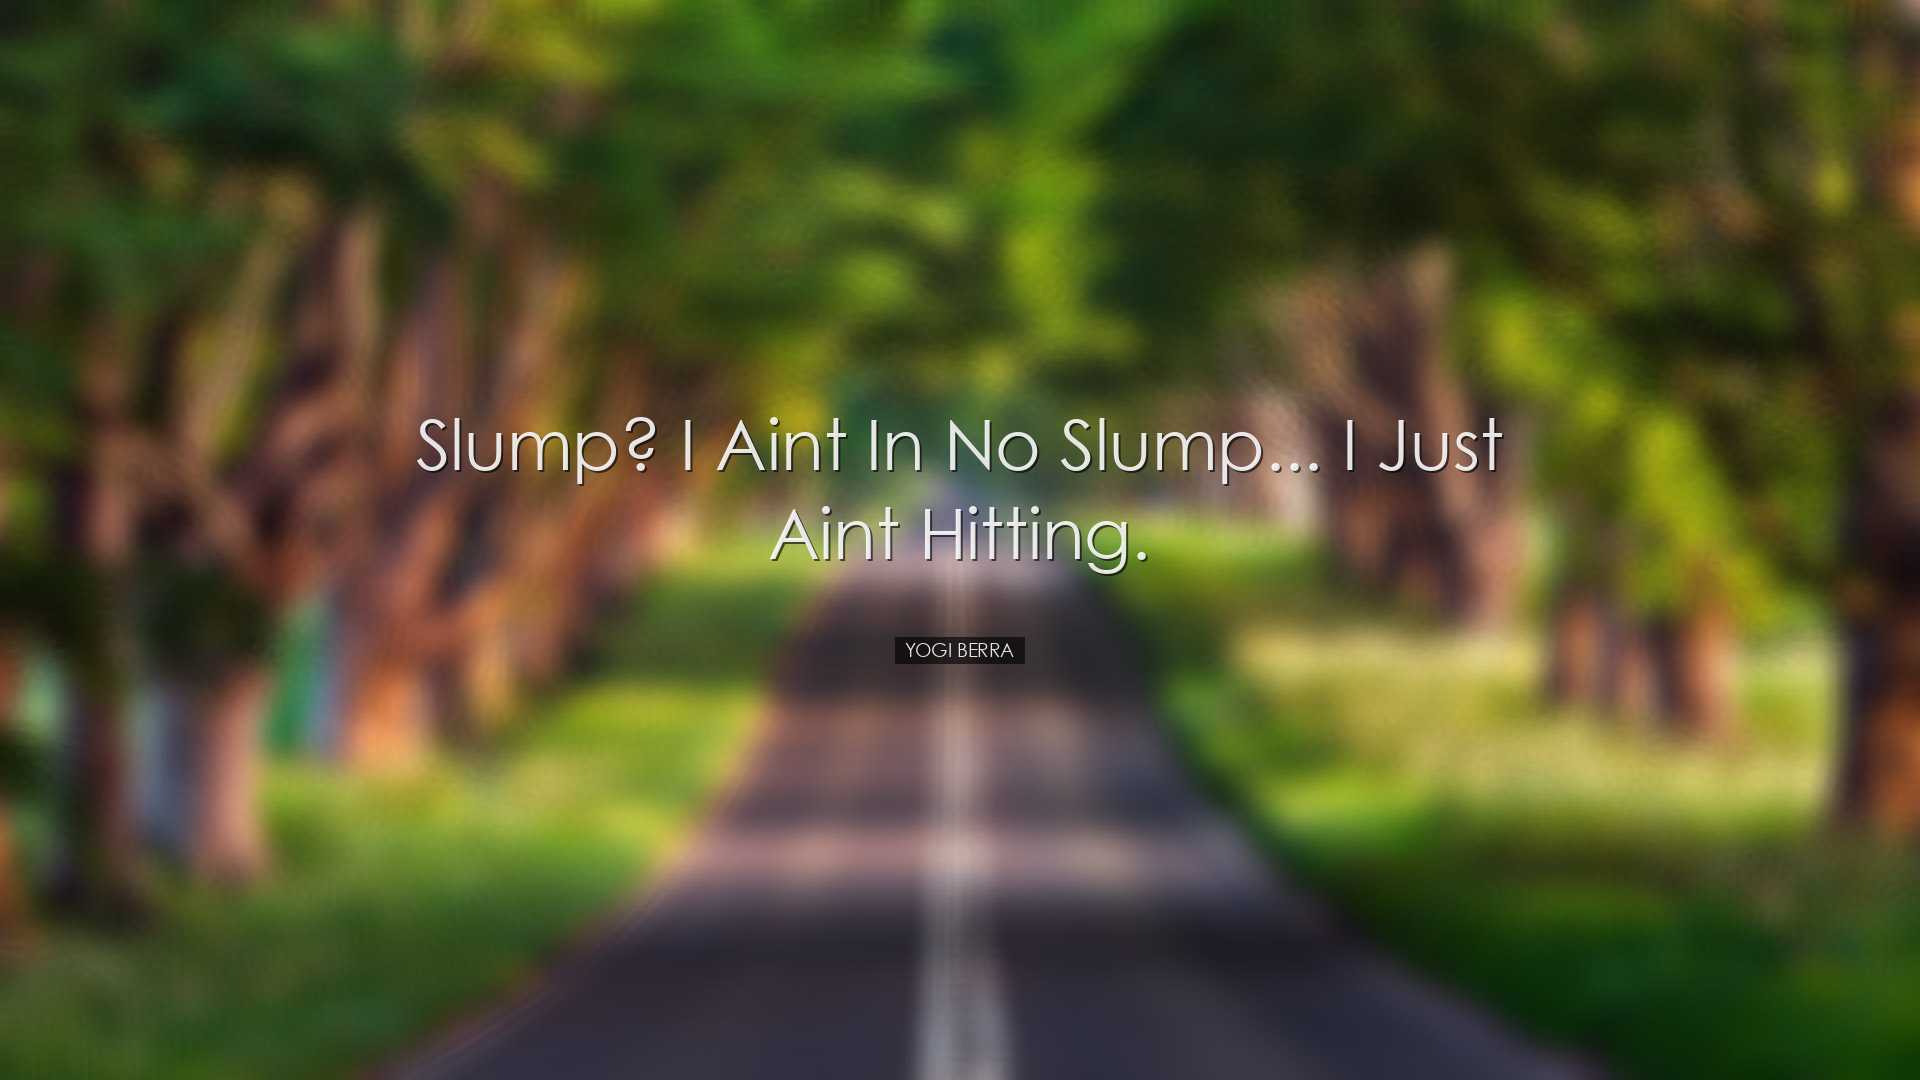 Slump? I aint in no slump... I just aint hitting. - Yogi Berra